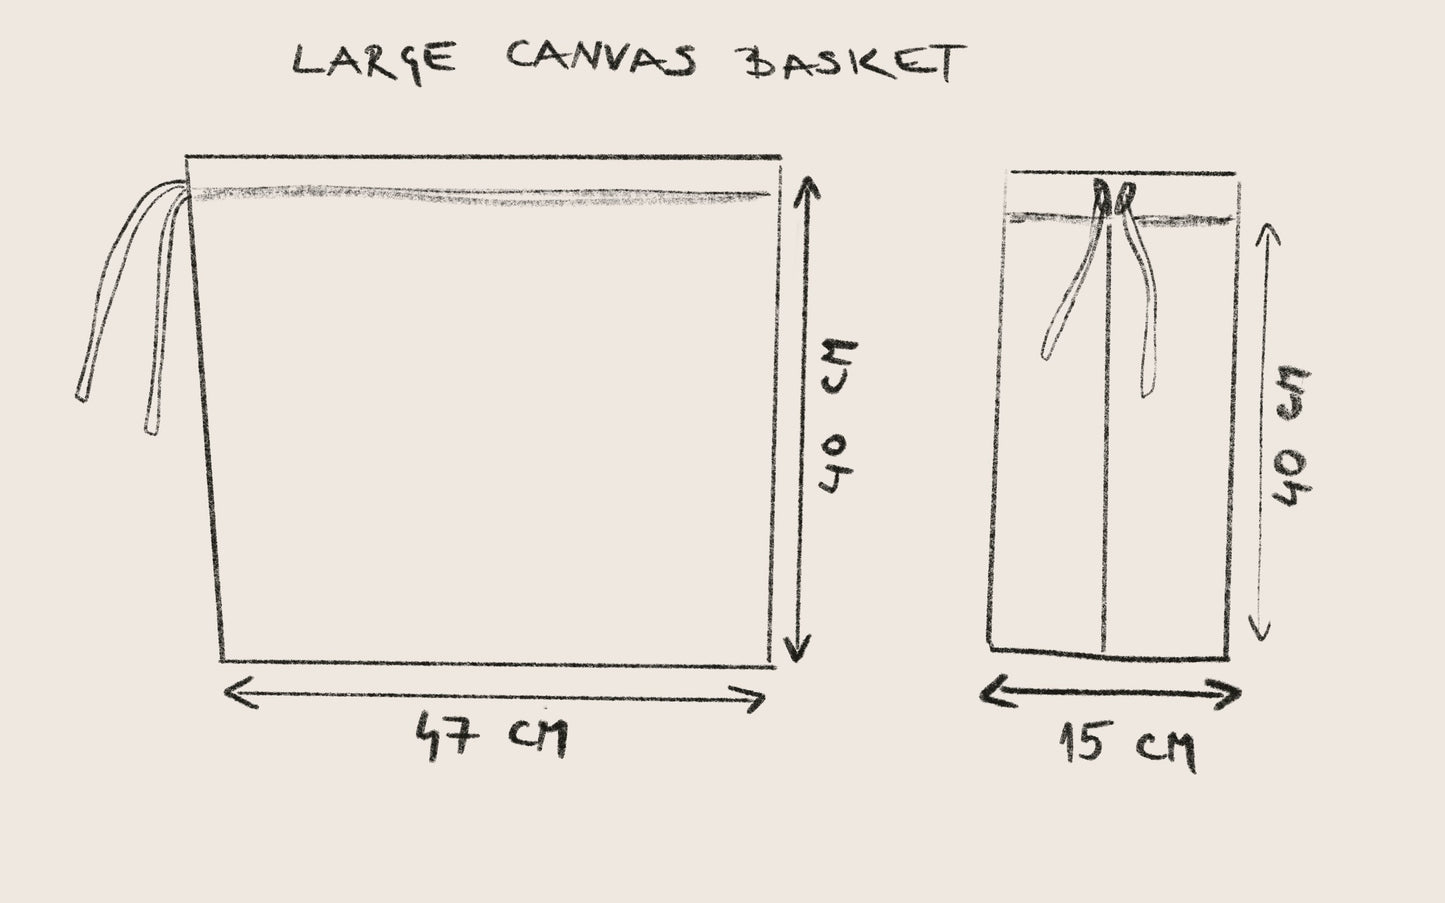 Large canvas storage basket - Abstract landscape